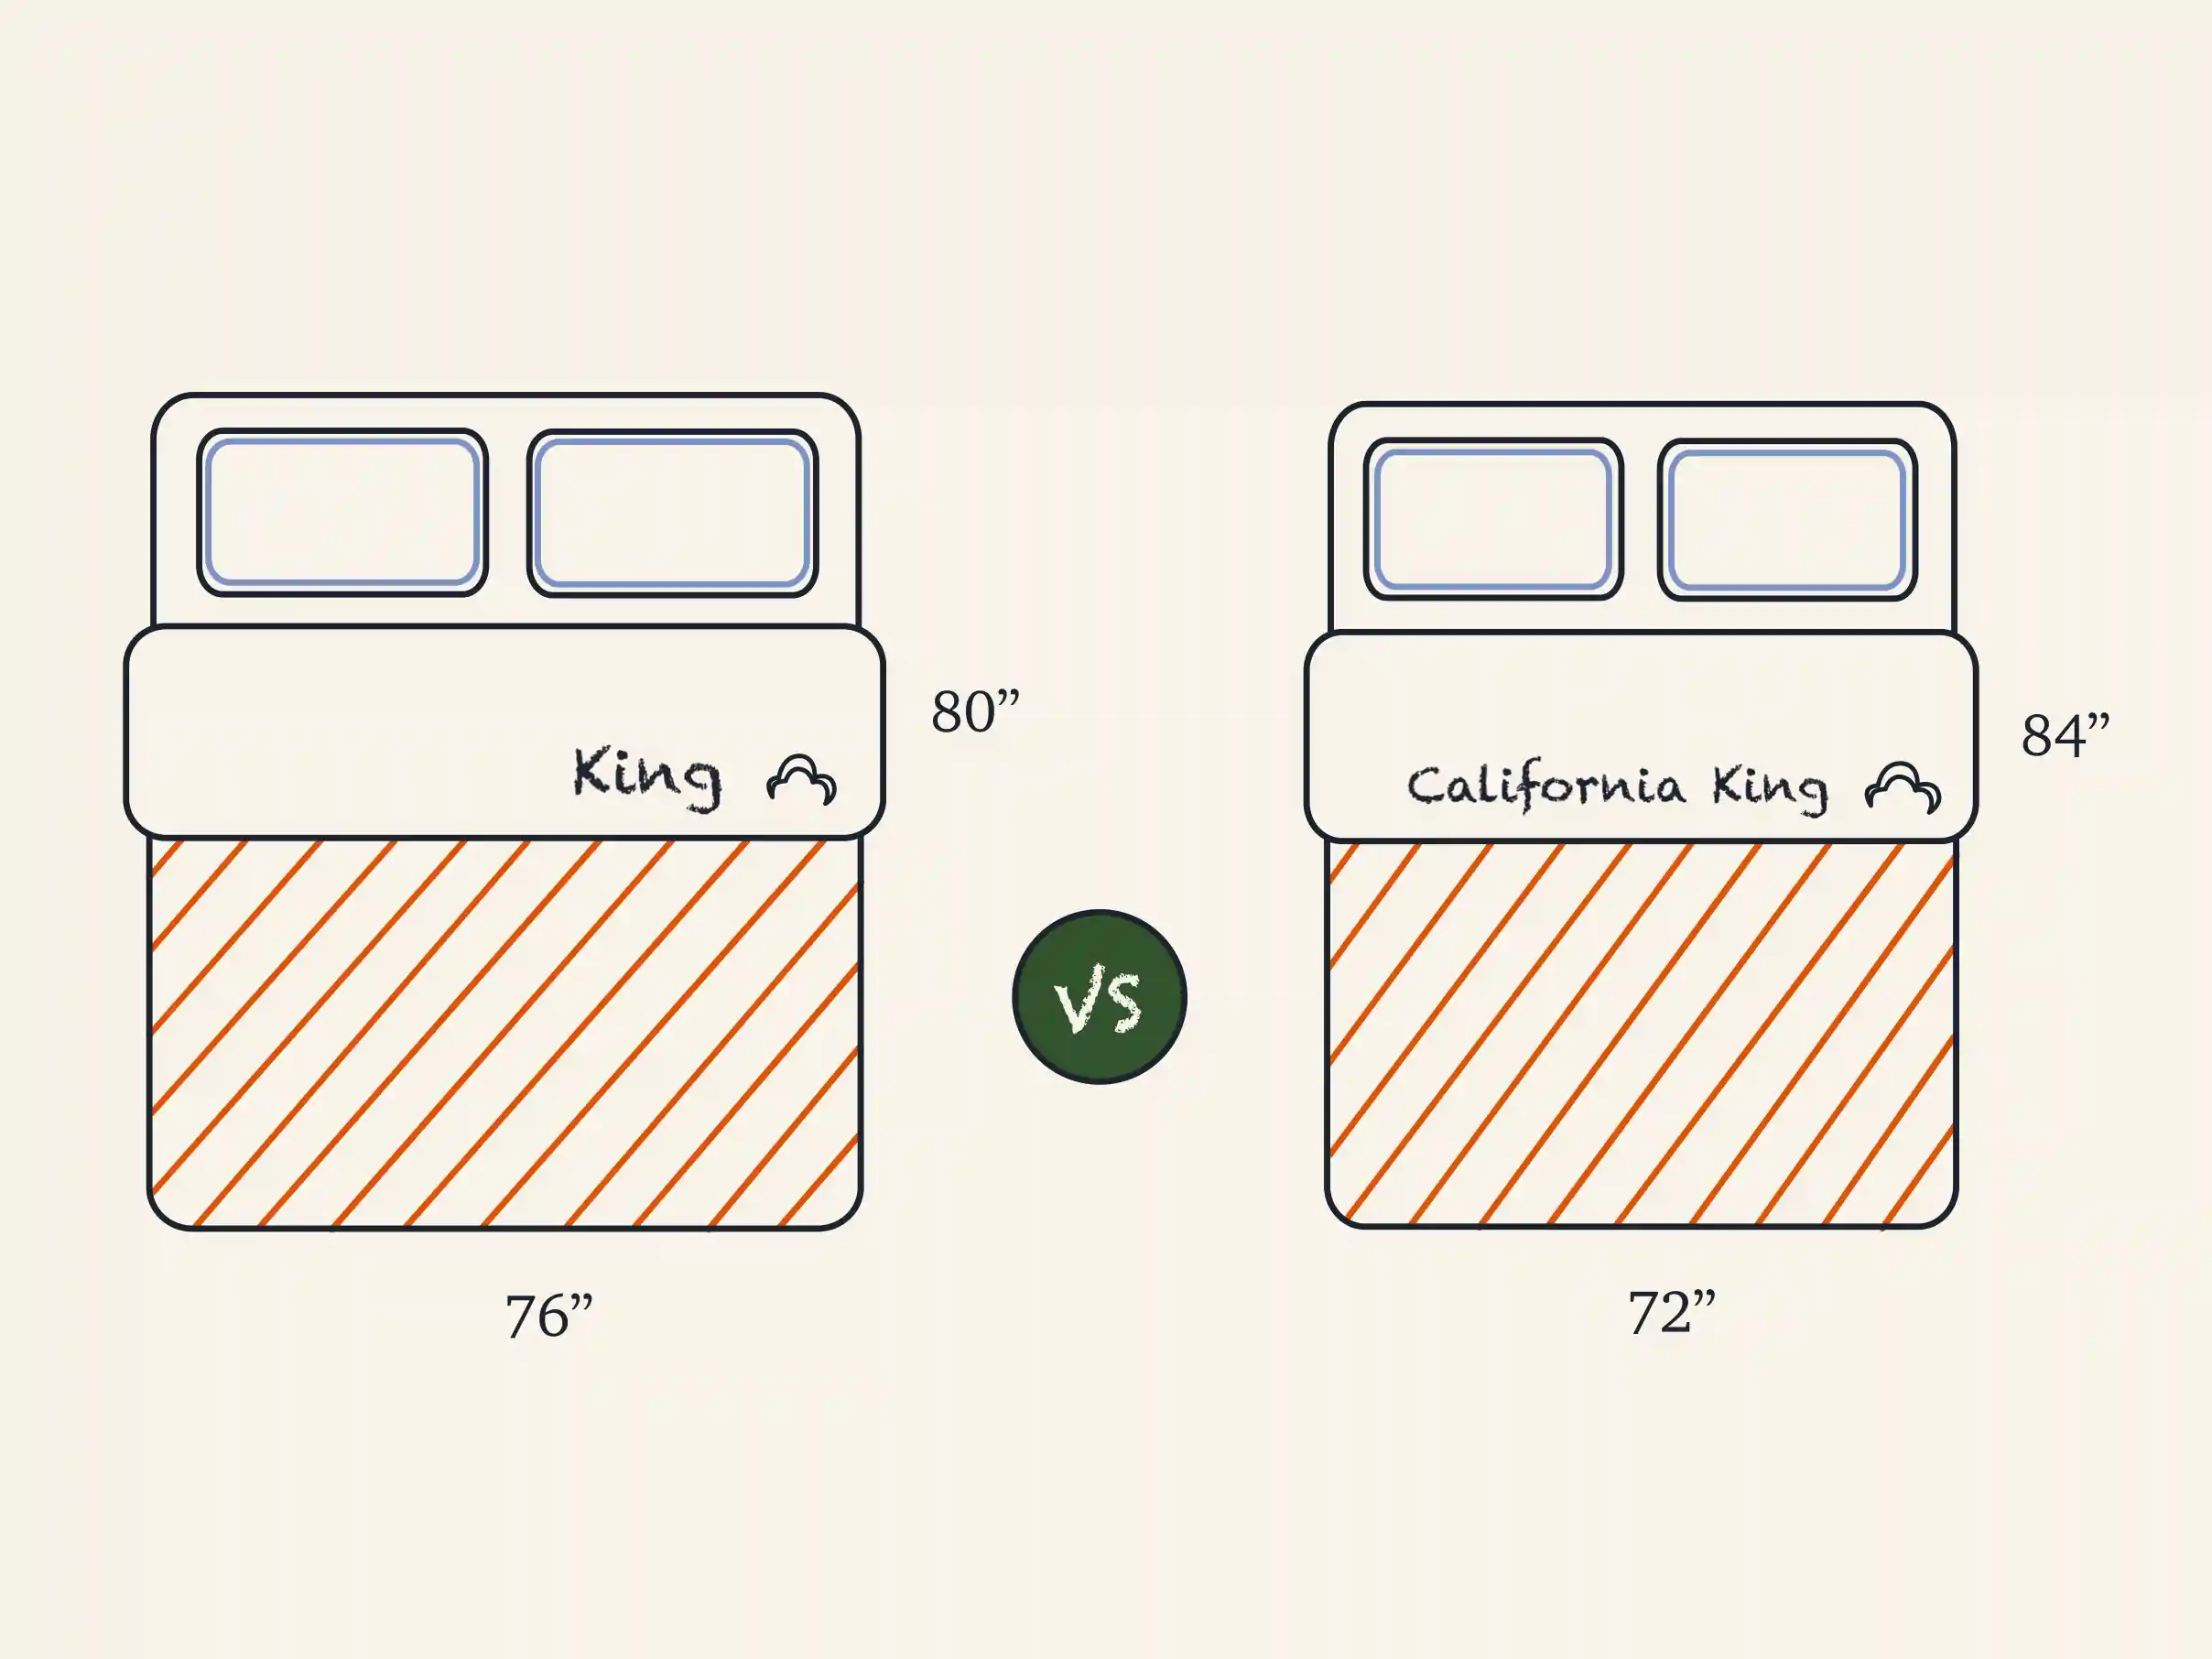 Air Foam vs. Memory Foam Mattresses - Detailed Comparison – LA